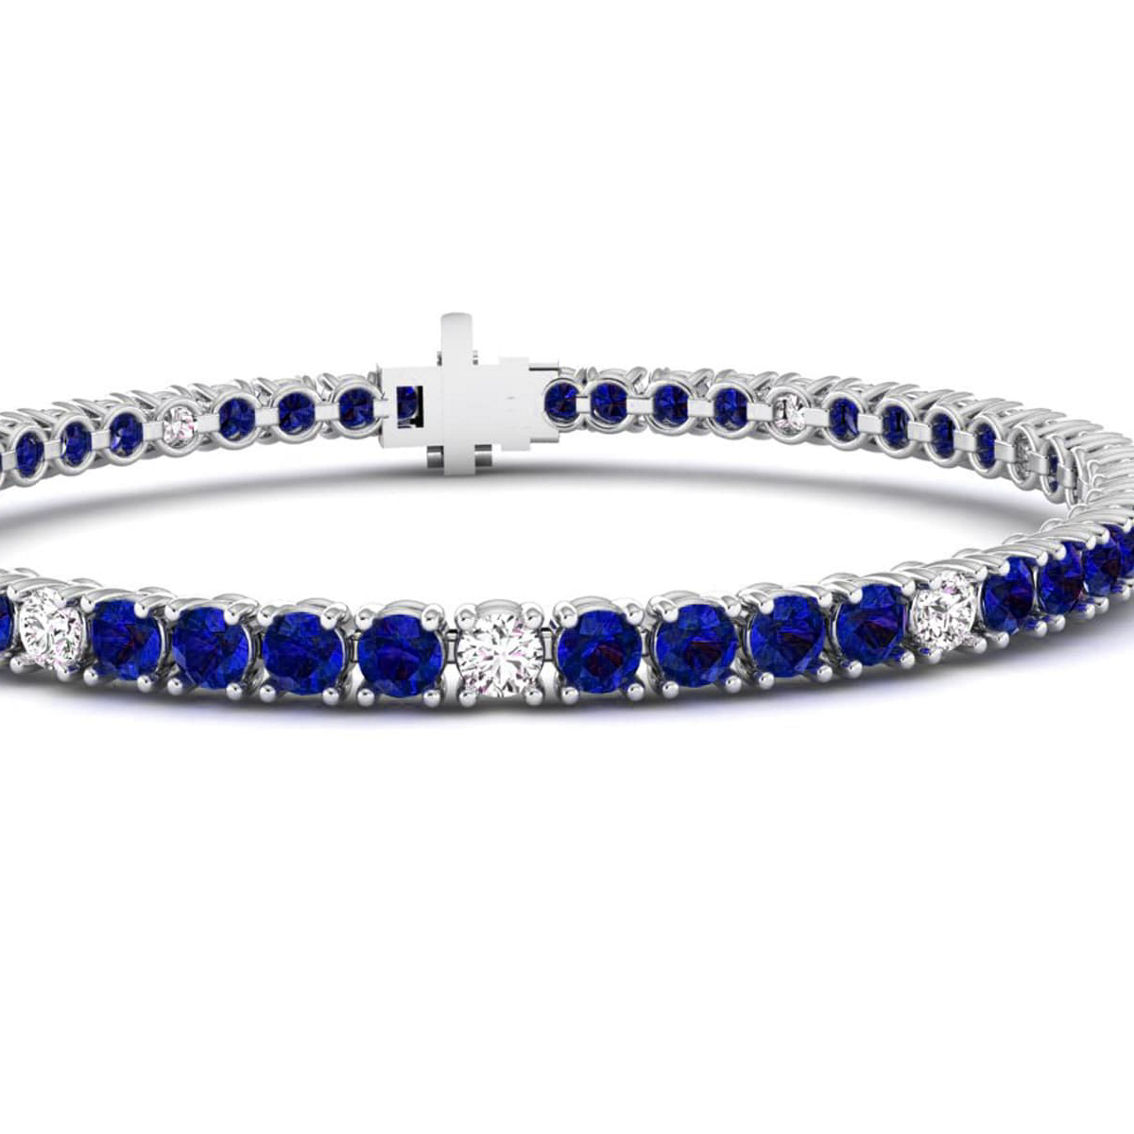 14K White Gold 1 7/10 cttw Diamond and Emerald Tennis Bracelet. - Image 3 of 3